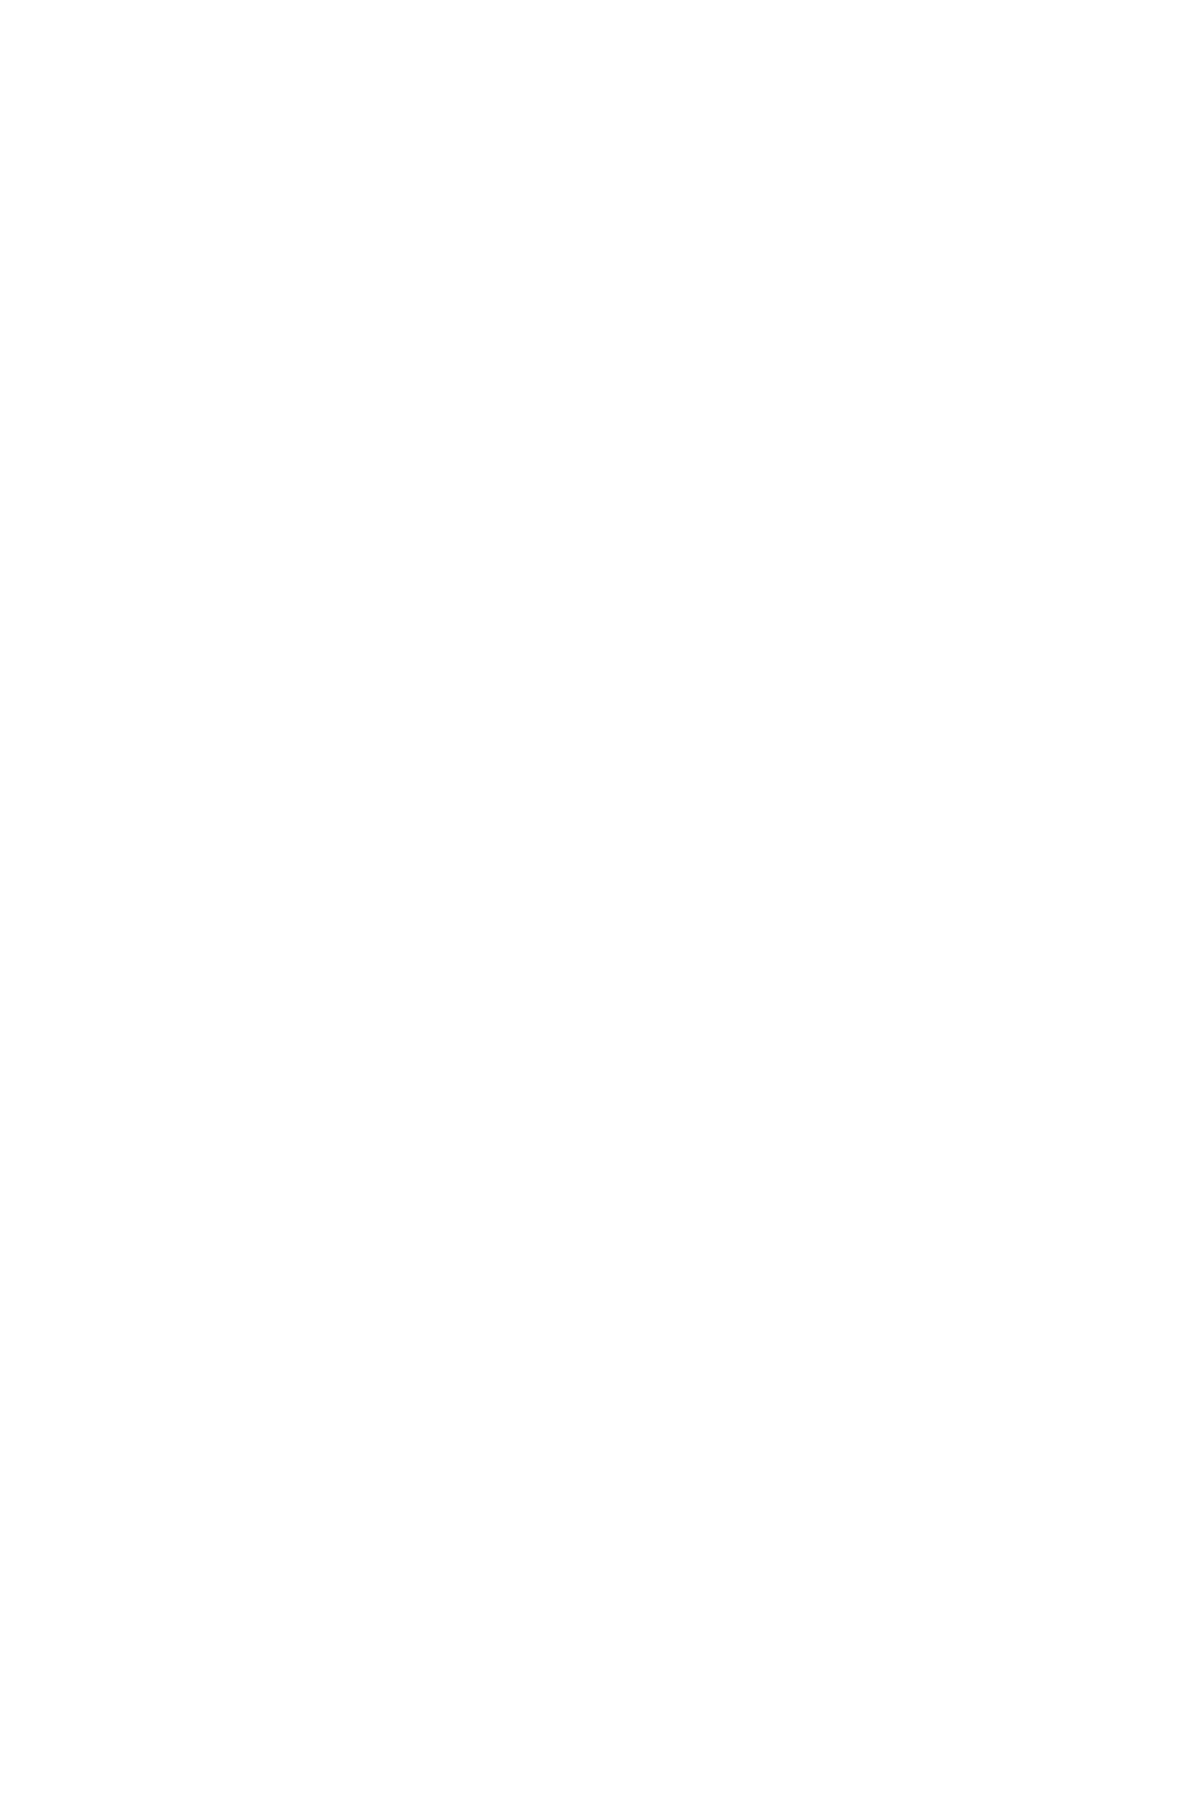 PRIMART Service